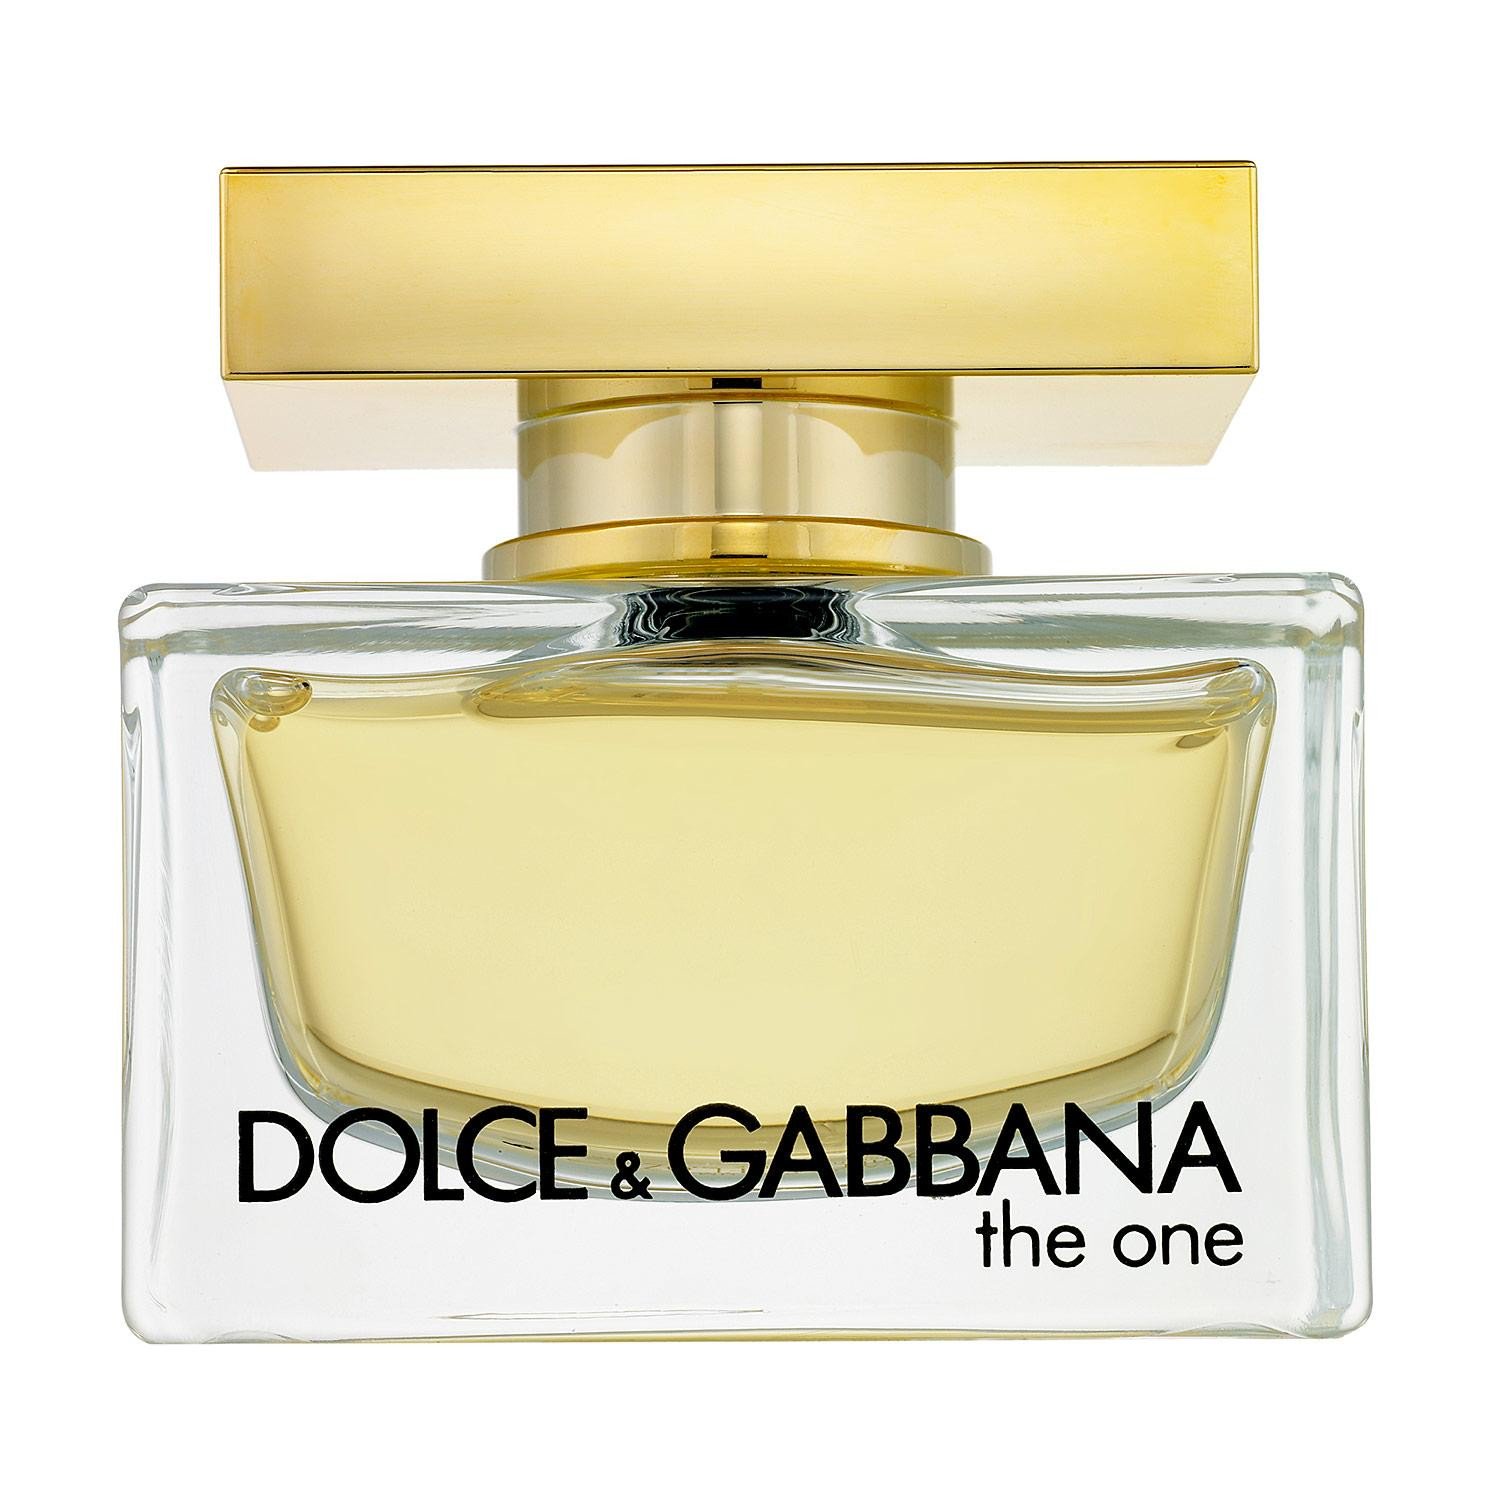 Dolce & Gabbana The One by Dolce & Gabbana TESTER for Women Eau de Parfum Spray 2.5 oz